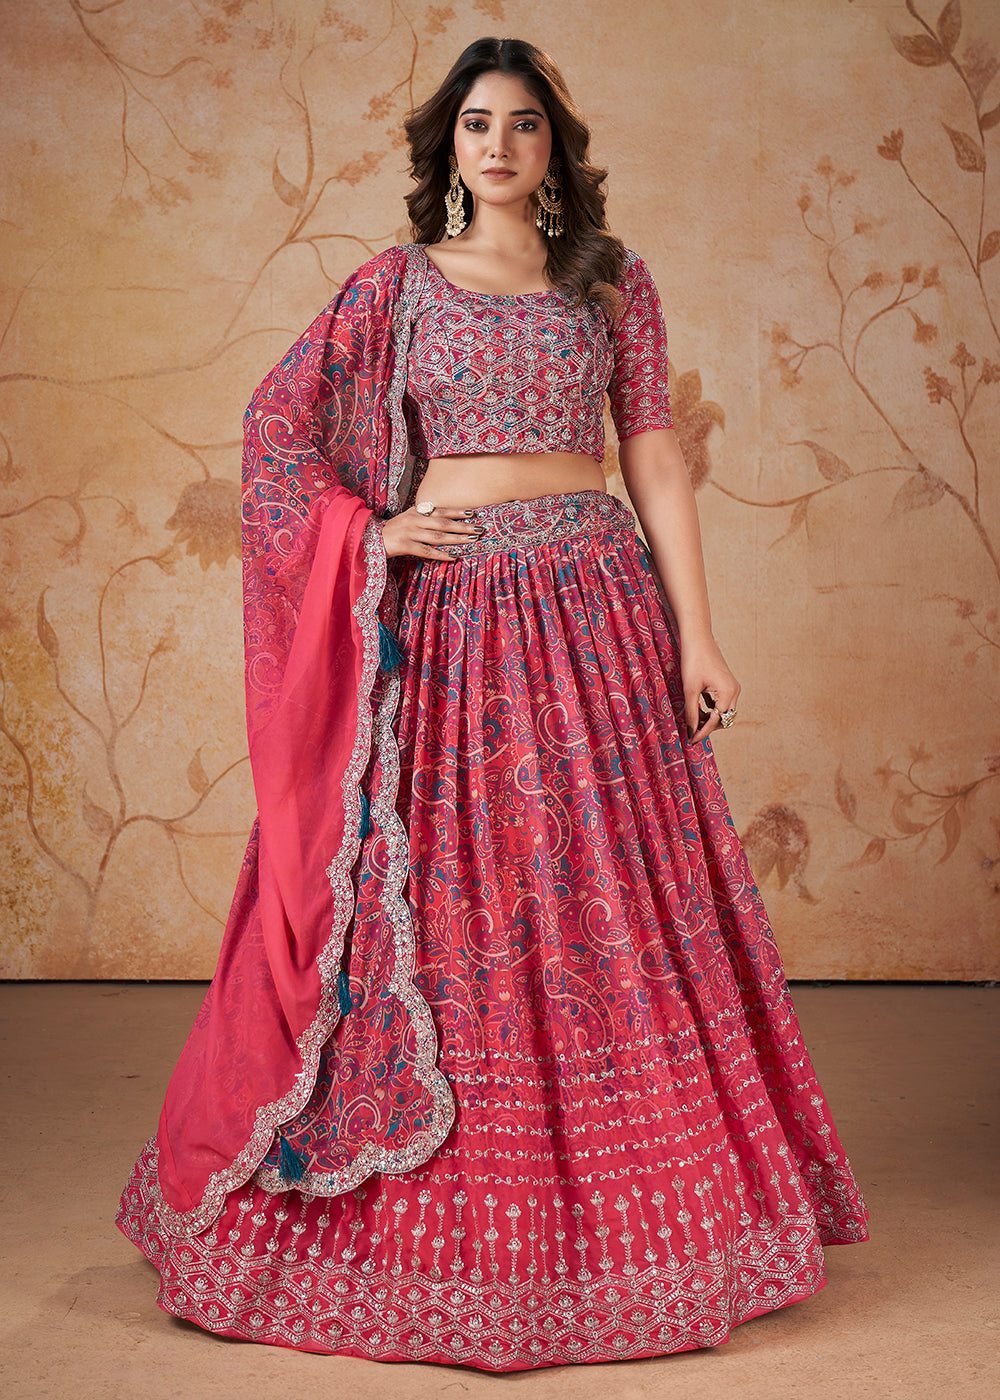 Buy Now Pink Digital Print & Sequins Wedding Festive Lehenga Choli Online in USA, UK, Canada & Worldwide at Empress Clothing. 